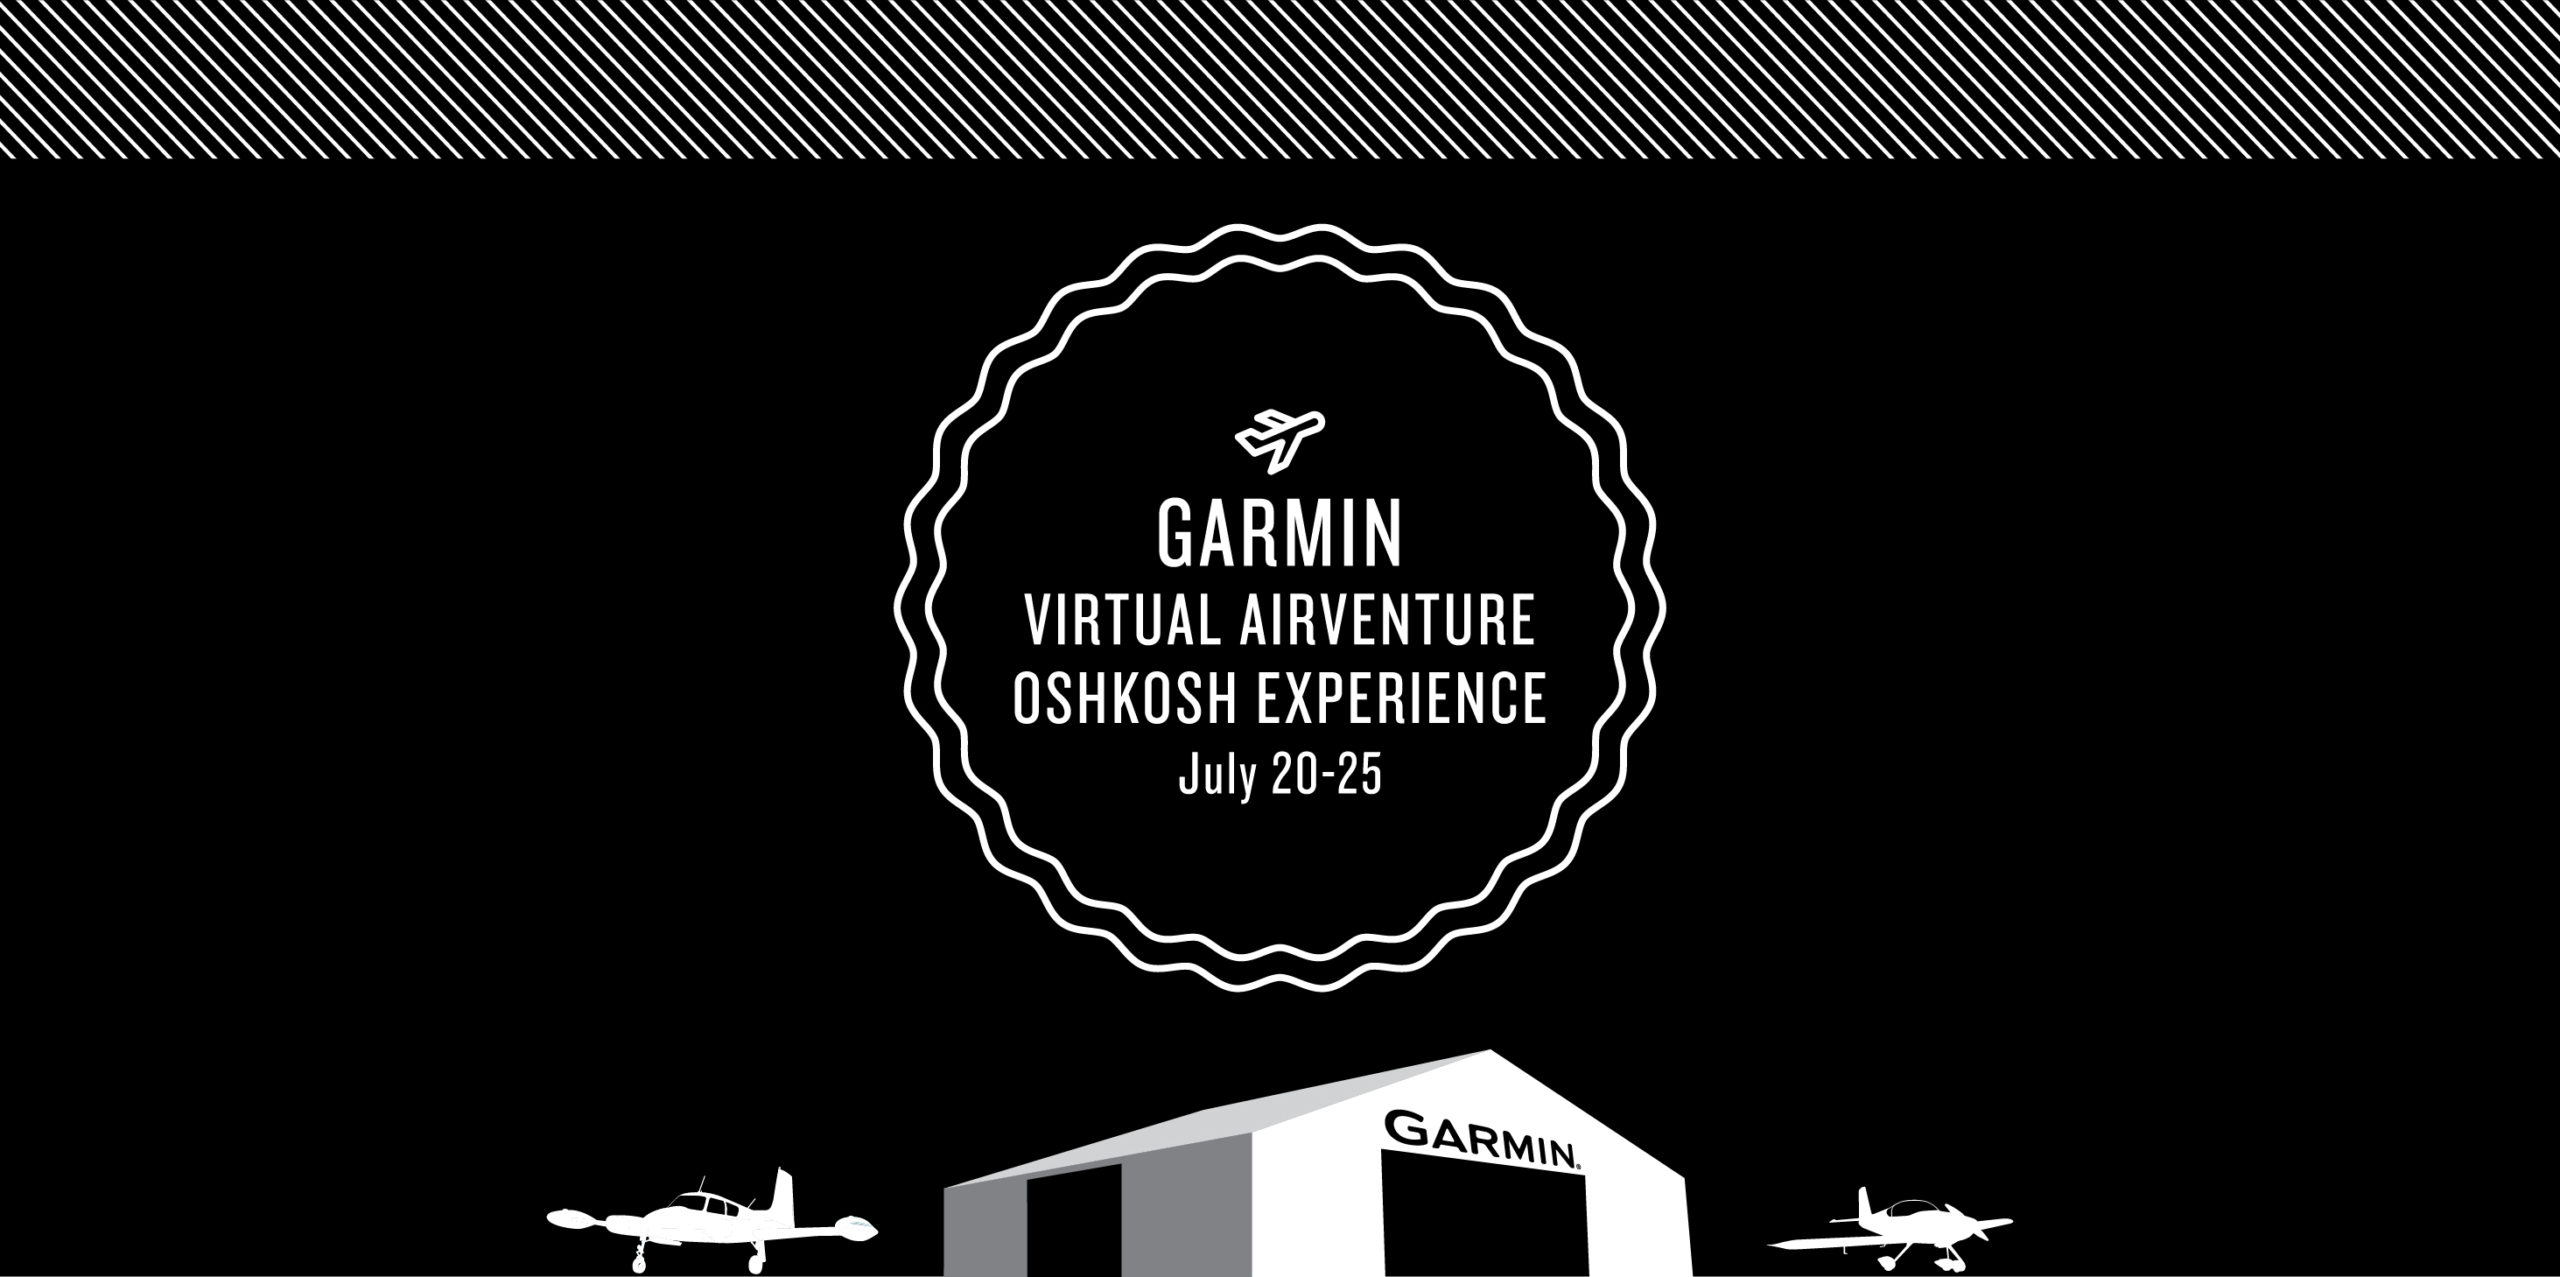 Garmin Virtual AirVenture Oshkosh Experience logo July 20-25 with aircraft hangar and aircraft silhouettes